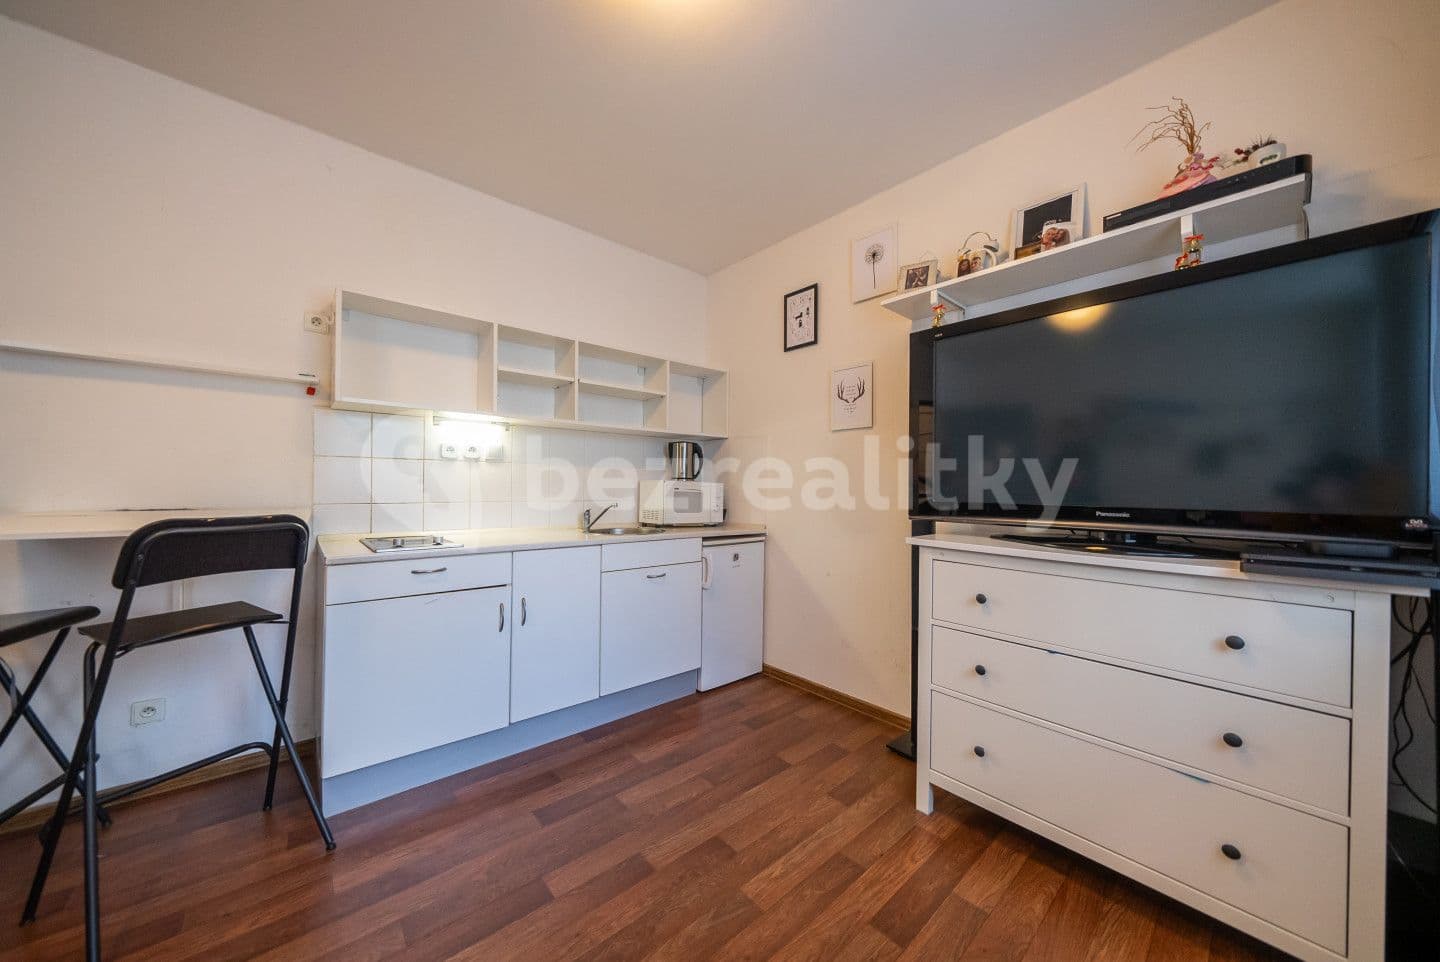 Predaj bytu 1-izbový 21 m², Cejl, Brno, Jihomoravský kraj